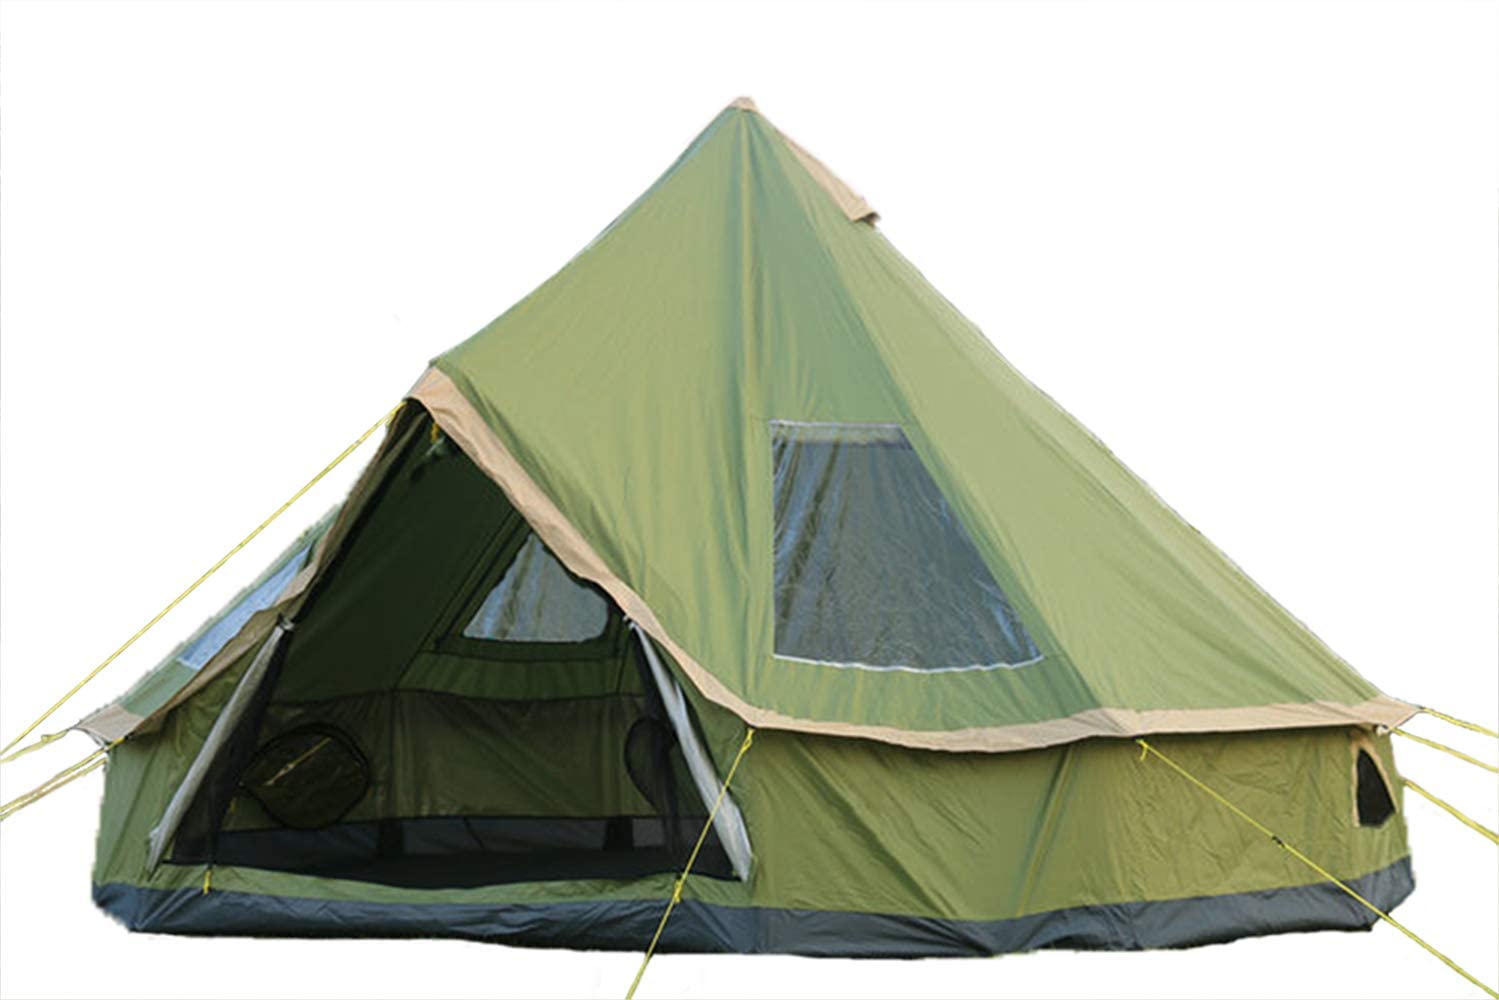 teepee tent - DANCHEL OUTDOOR Backpacking Lightweight Teepee